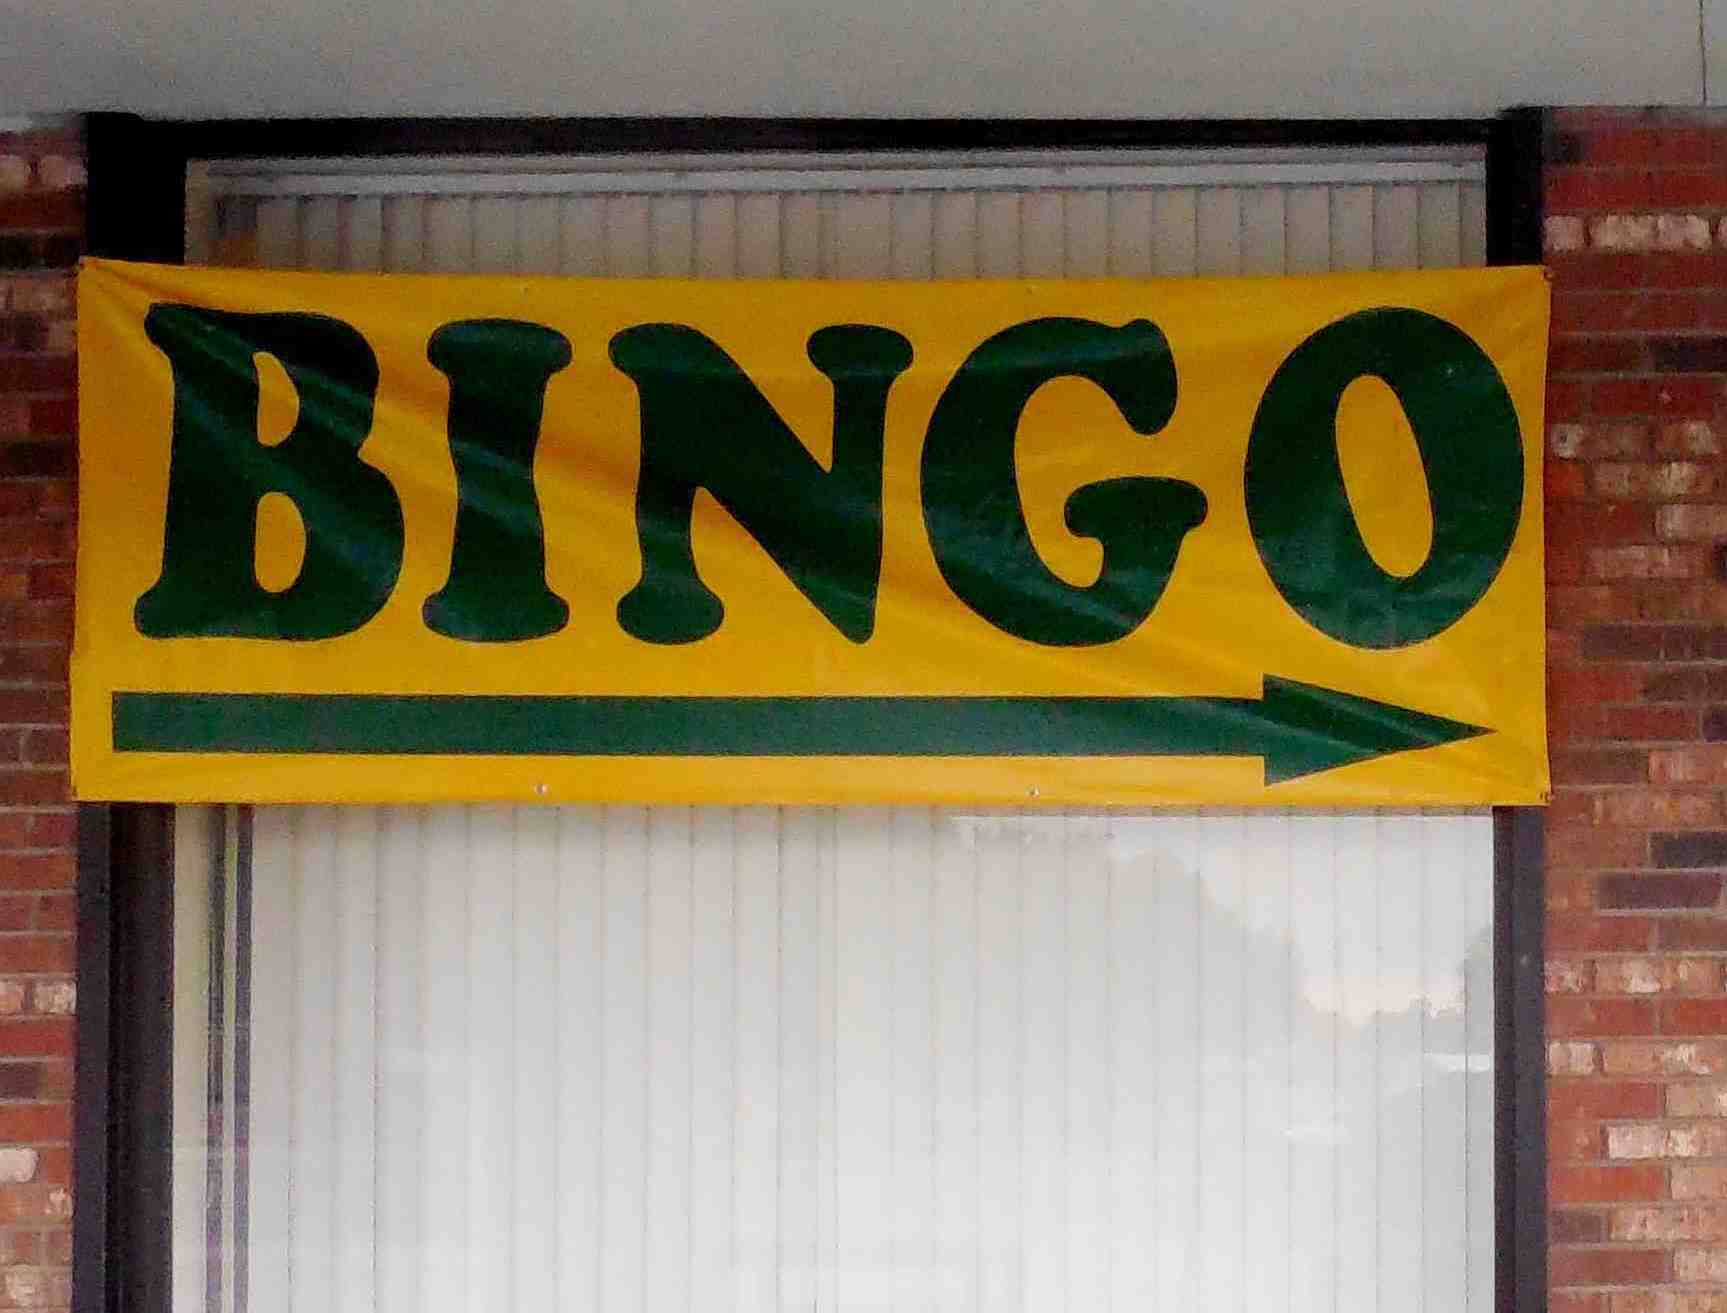 Wildwood commissioners unanimously approve bingo ordinance